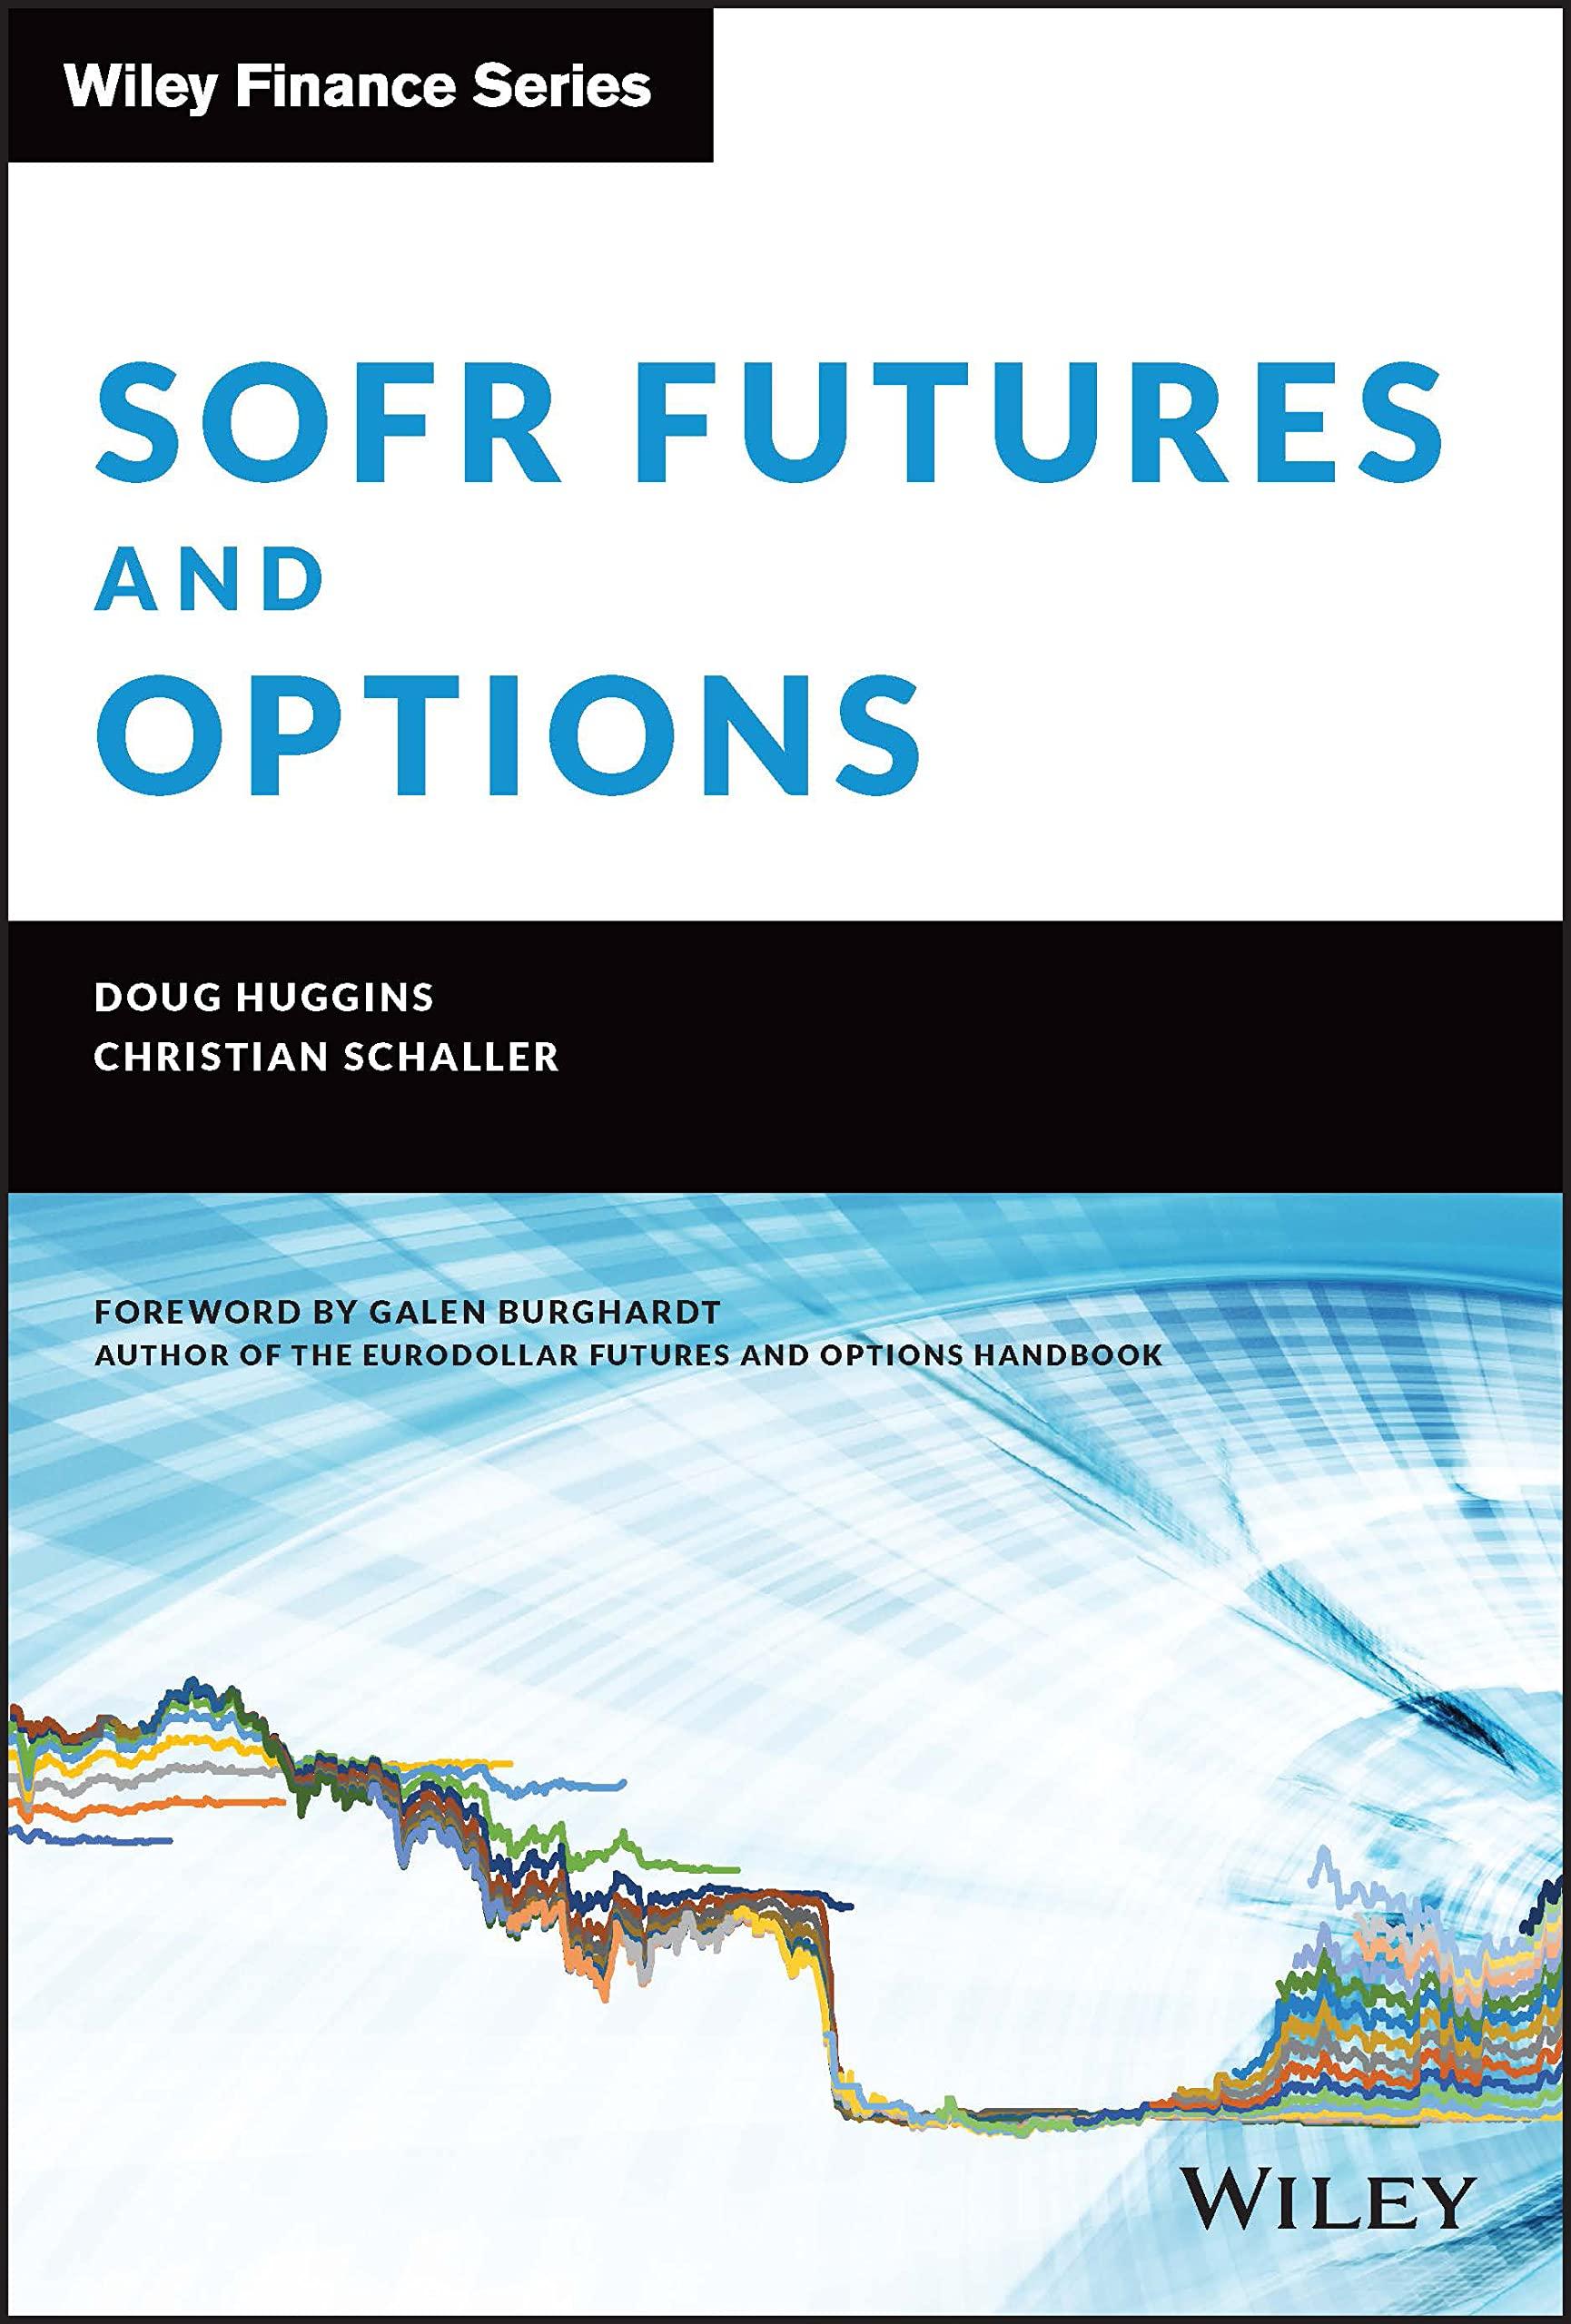 sofr futures and options 1st edition christian schaller, doug huggins, galen burghardt 1119888948,